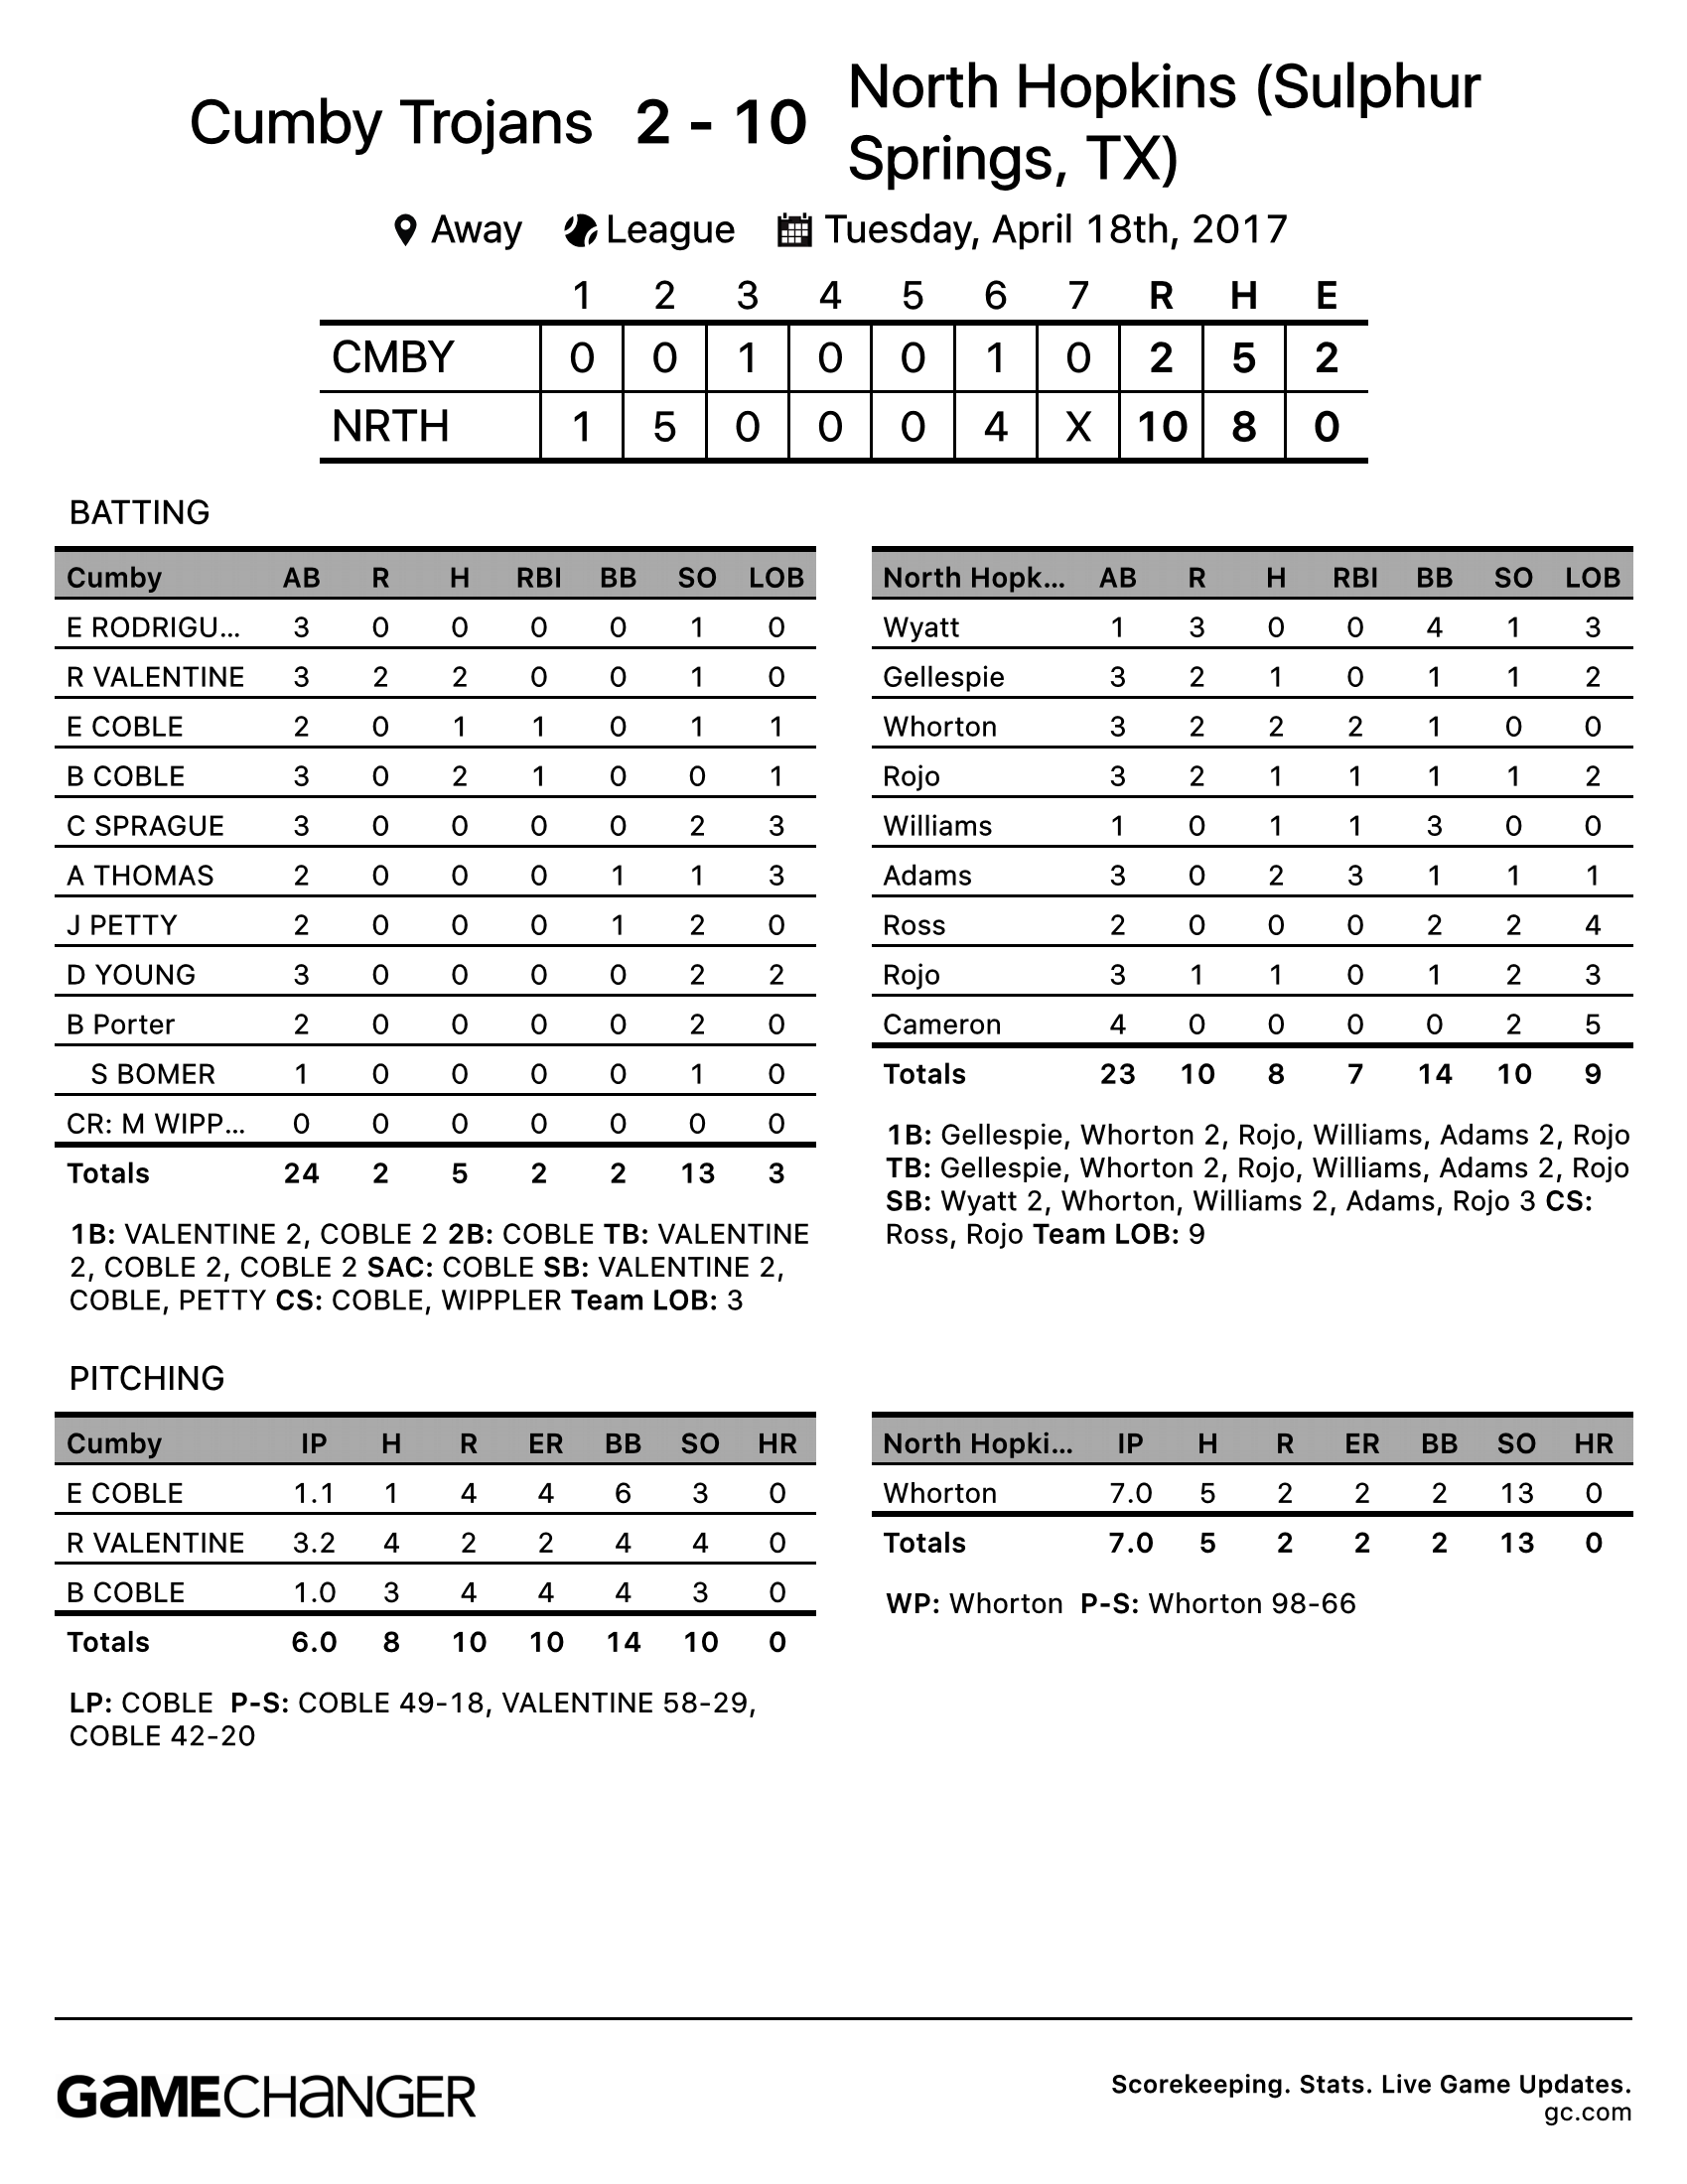 North Hopkins Baseball Defeats Cumby 10-2 (Box Score)